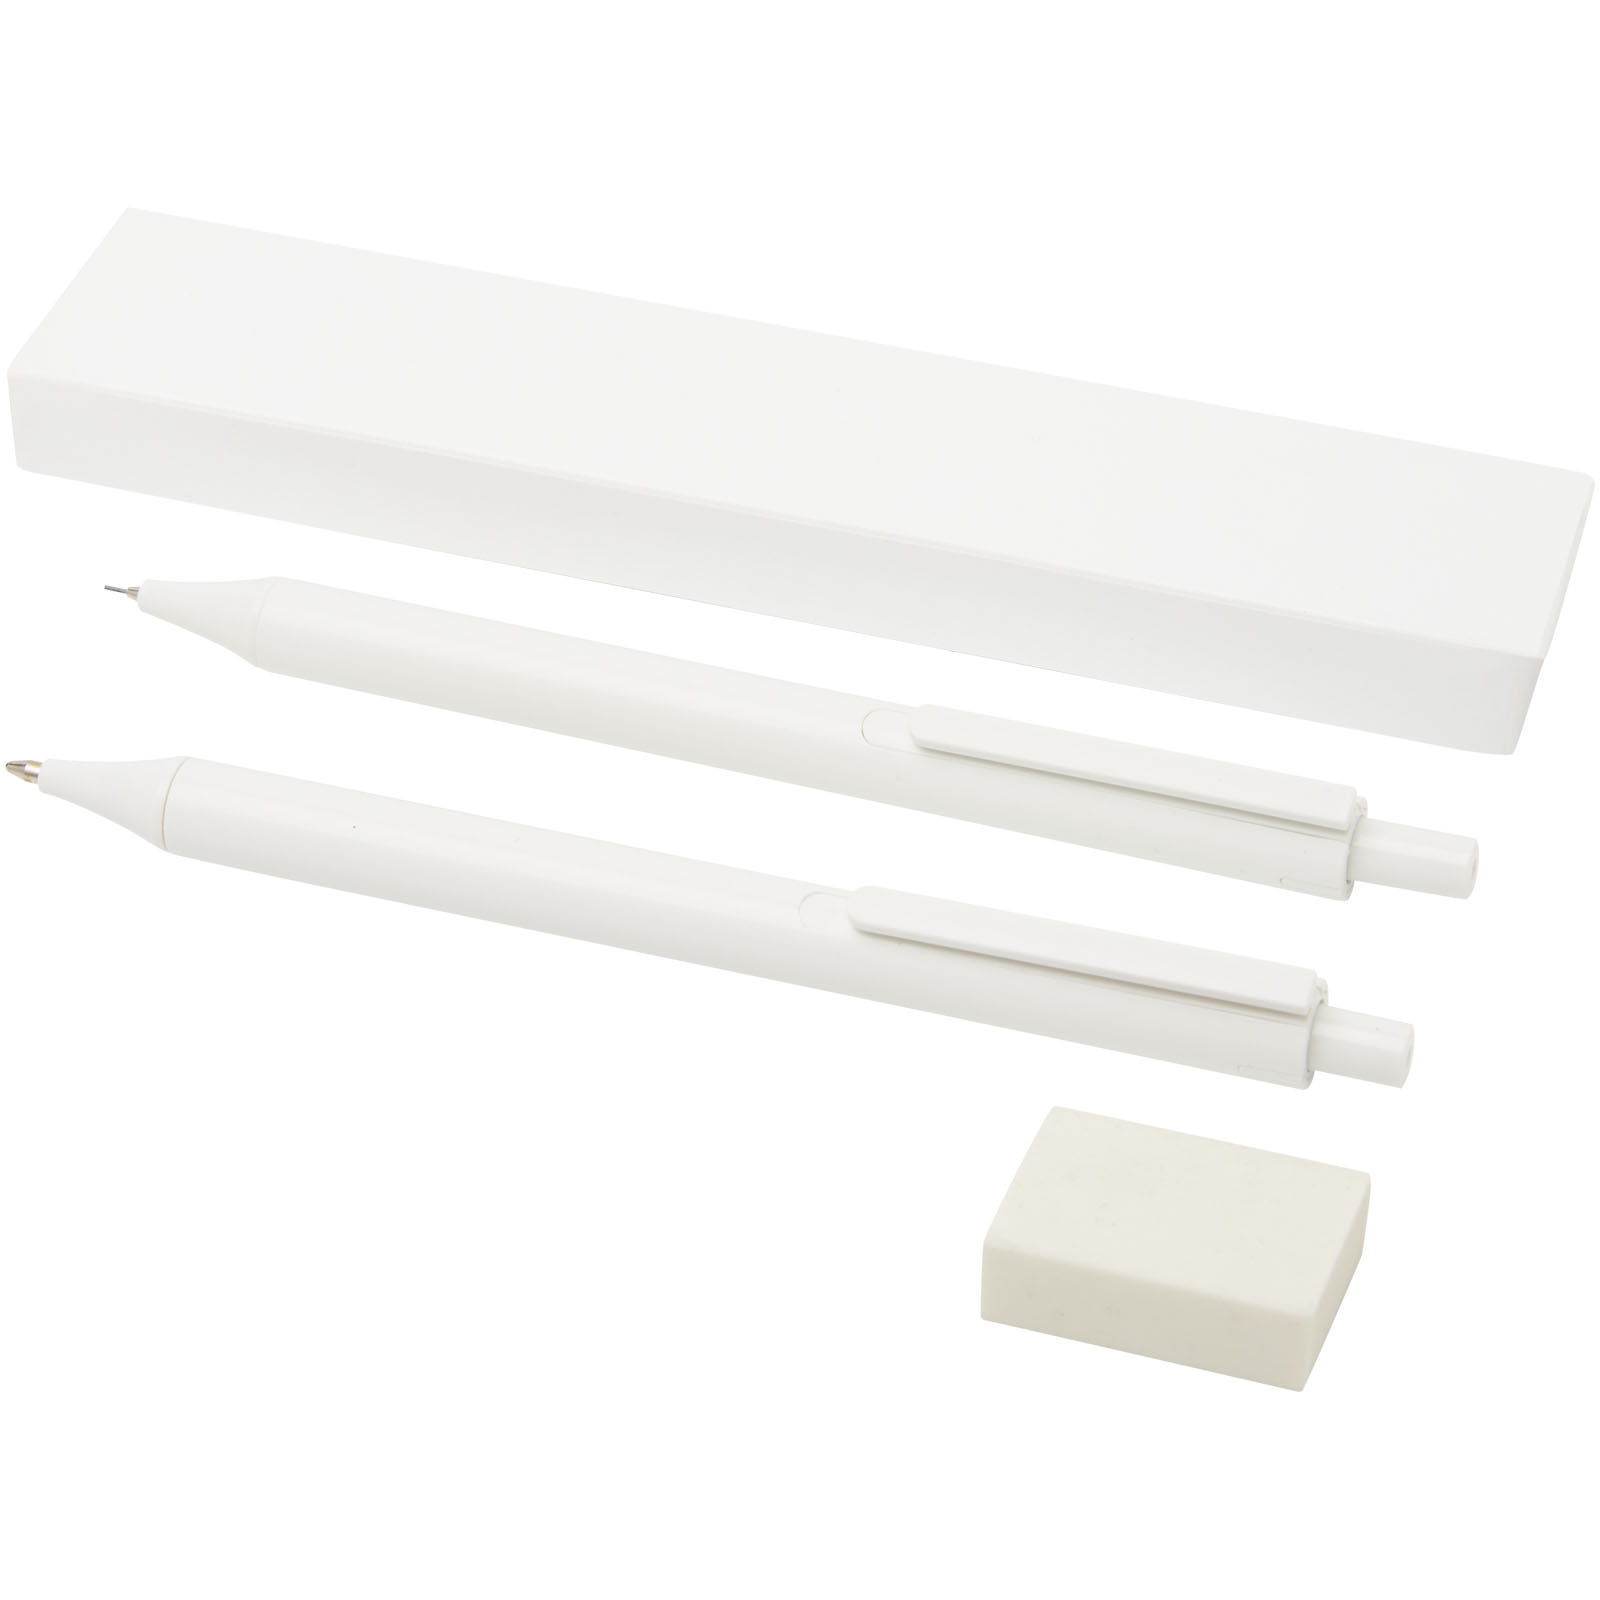 Pens & Writing - Salus anti-bacterial pen set